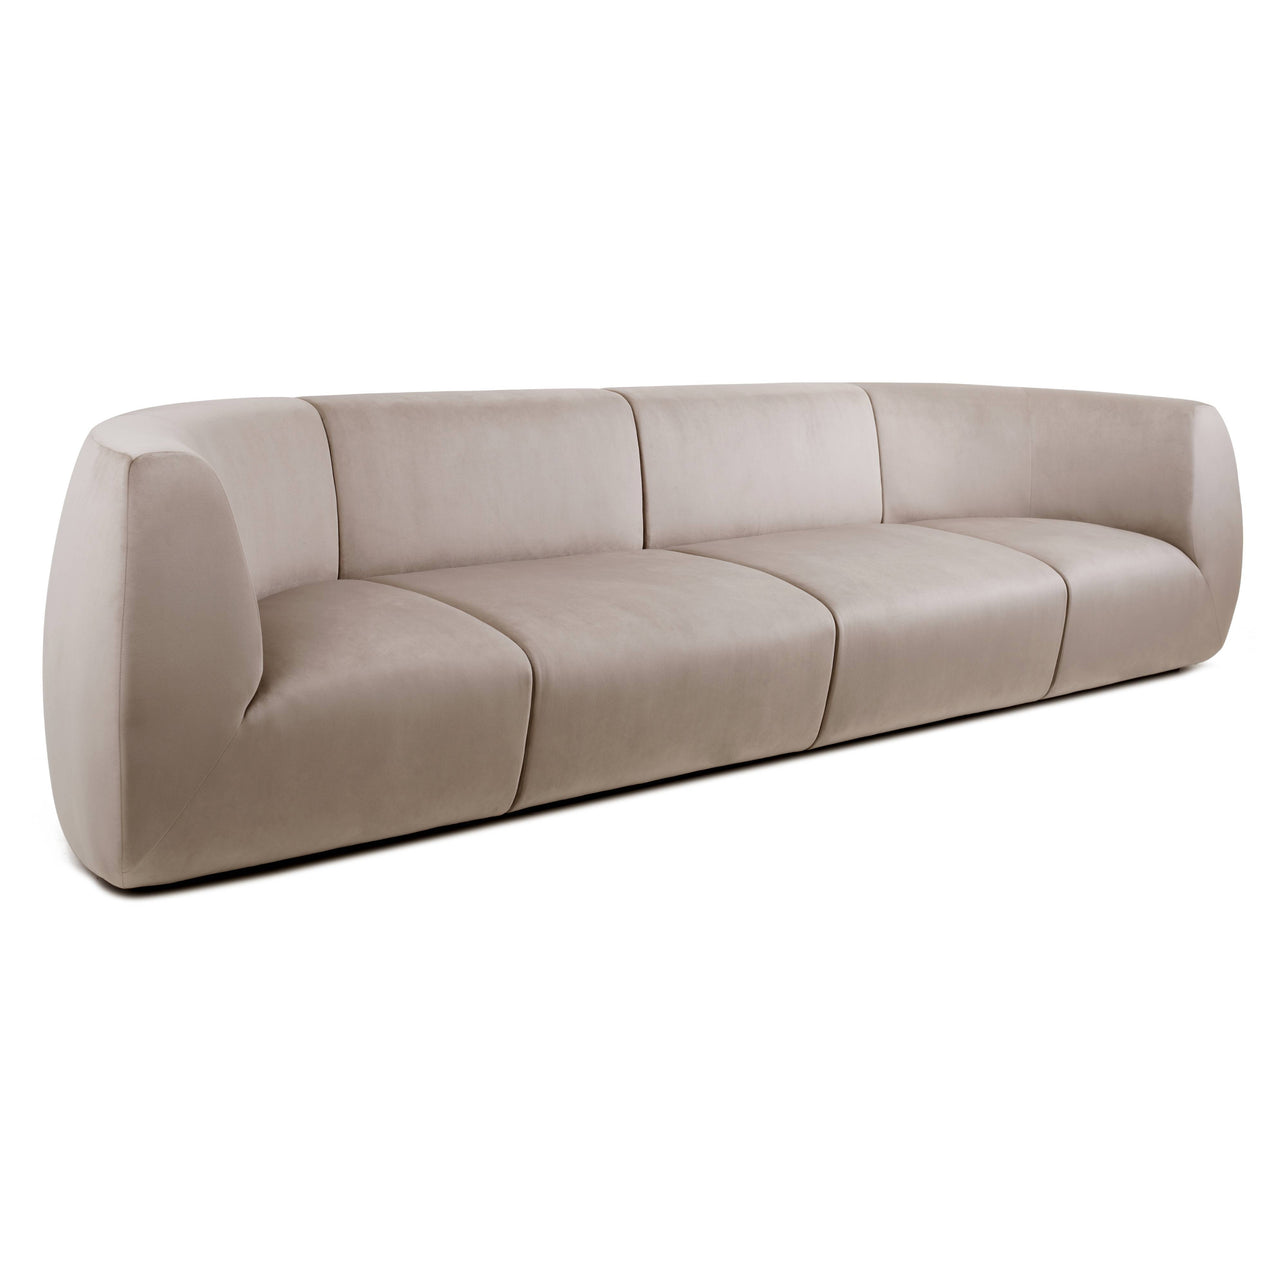 Infinity Modular Sofa: Composition 6